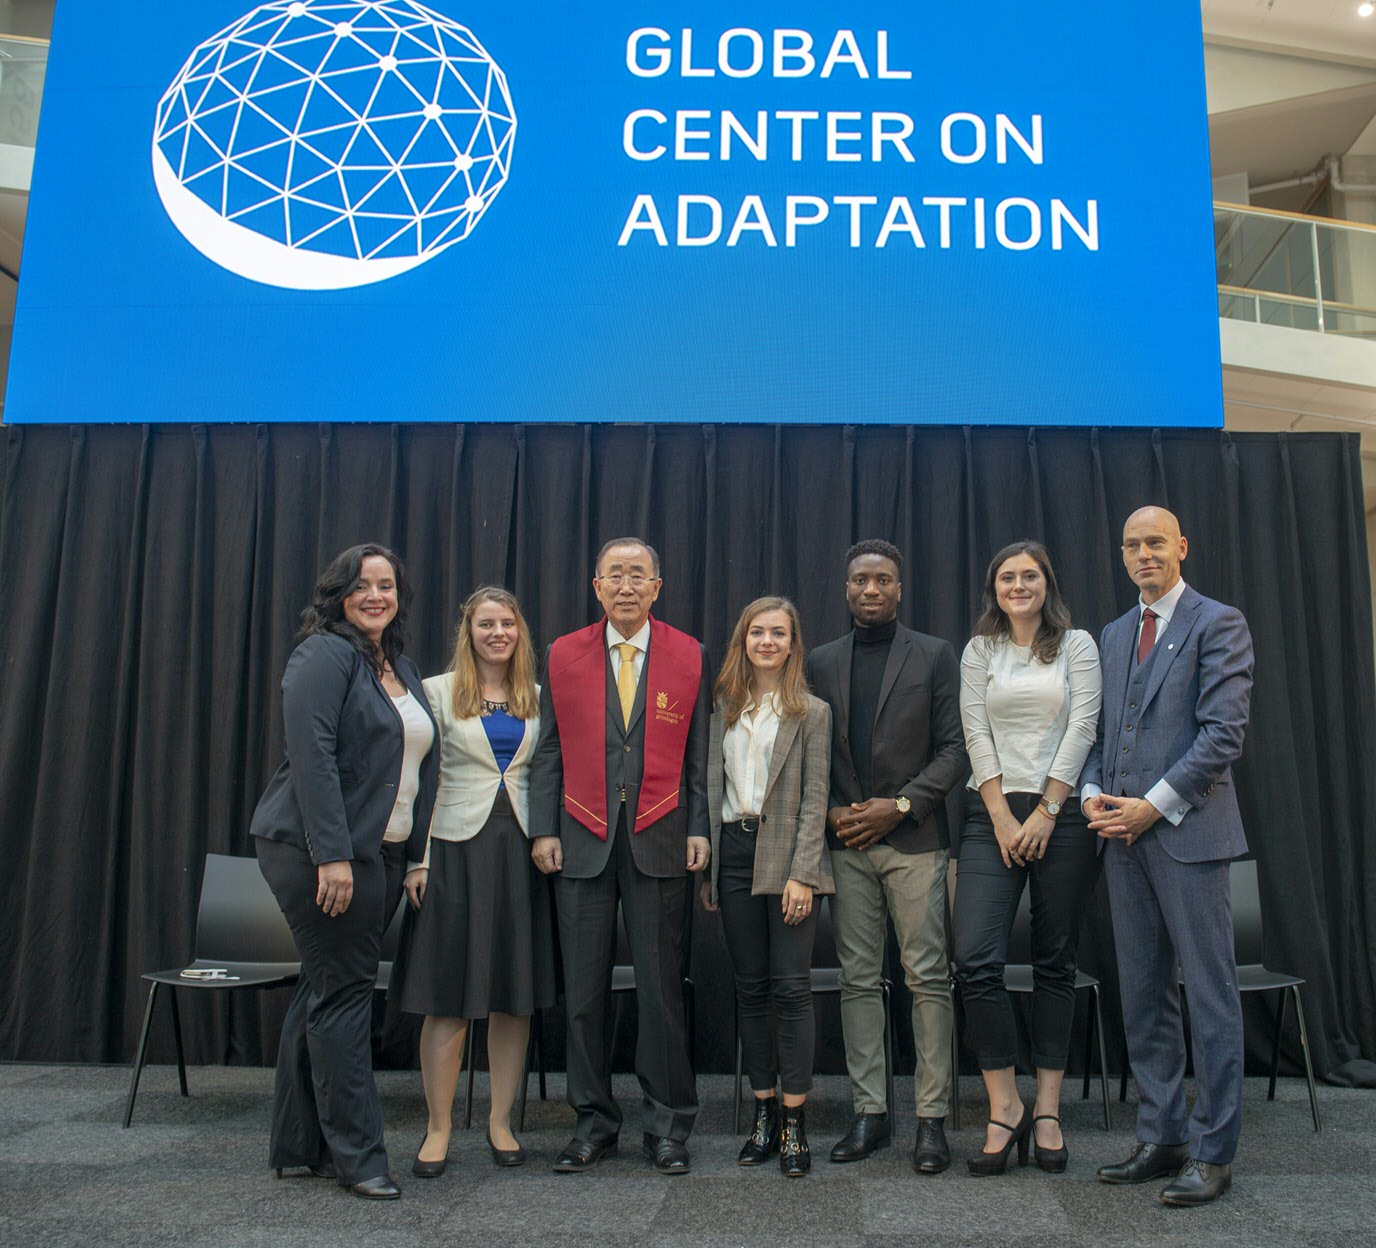 8e secretaris-generaal van de VN Ban Ki-moon opent vestiging Global Center on Adaptation in Groningen8th Secretary-General of the UN Ban Ki-moon opens Global Center on Adaptation Office in Groningen